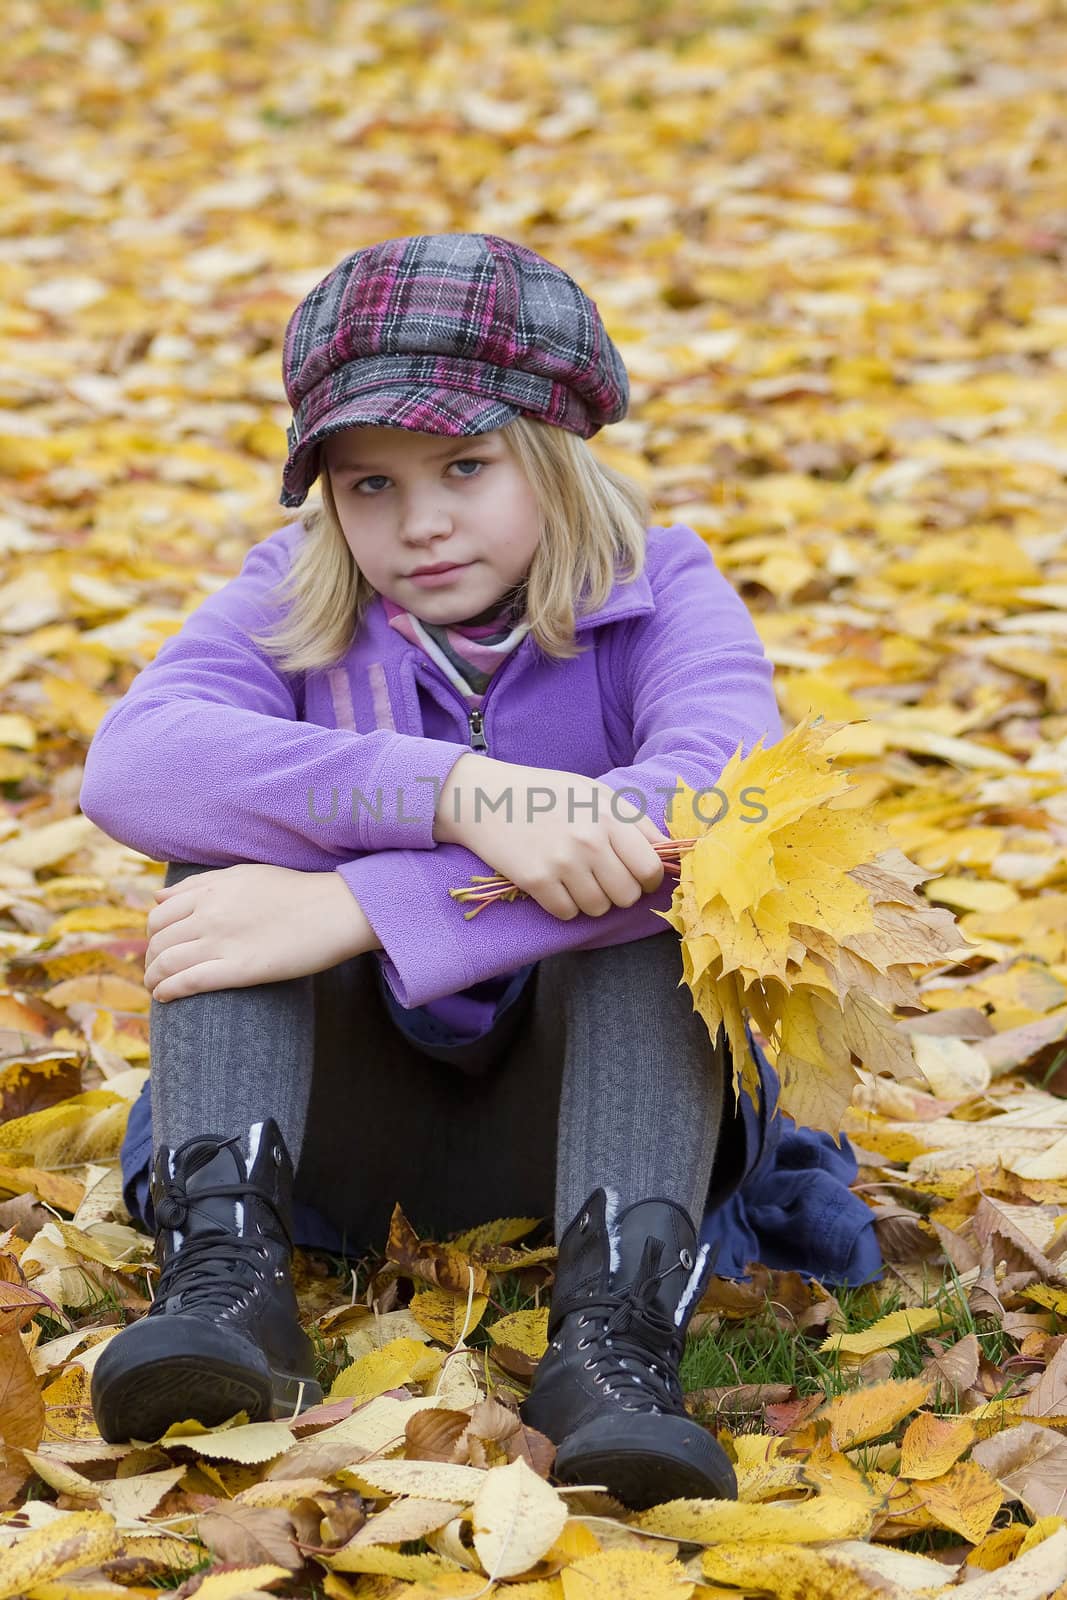 little girl sitting on leaves in the park